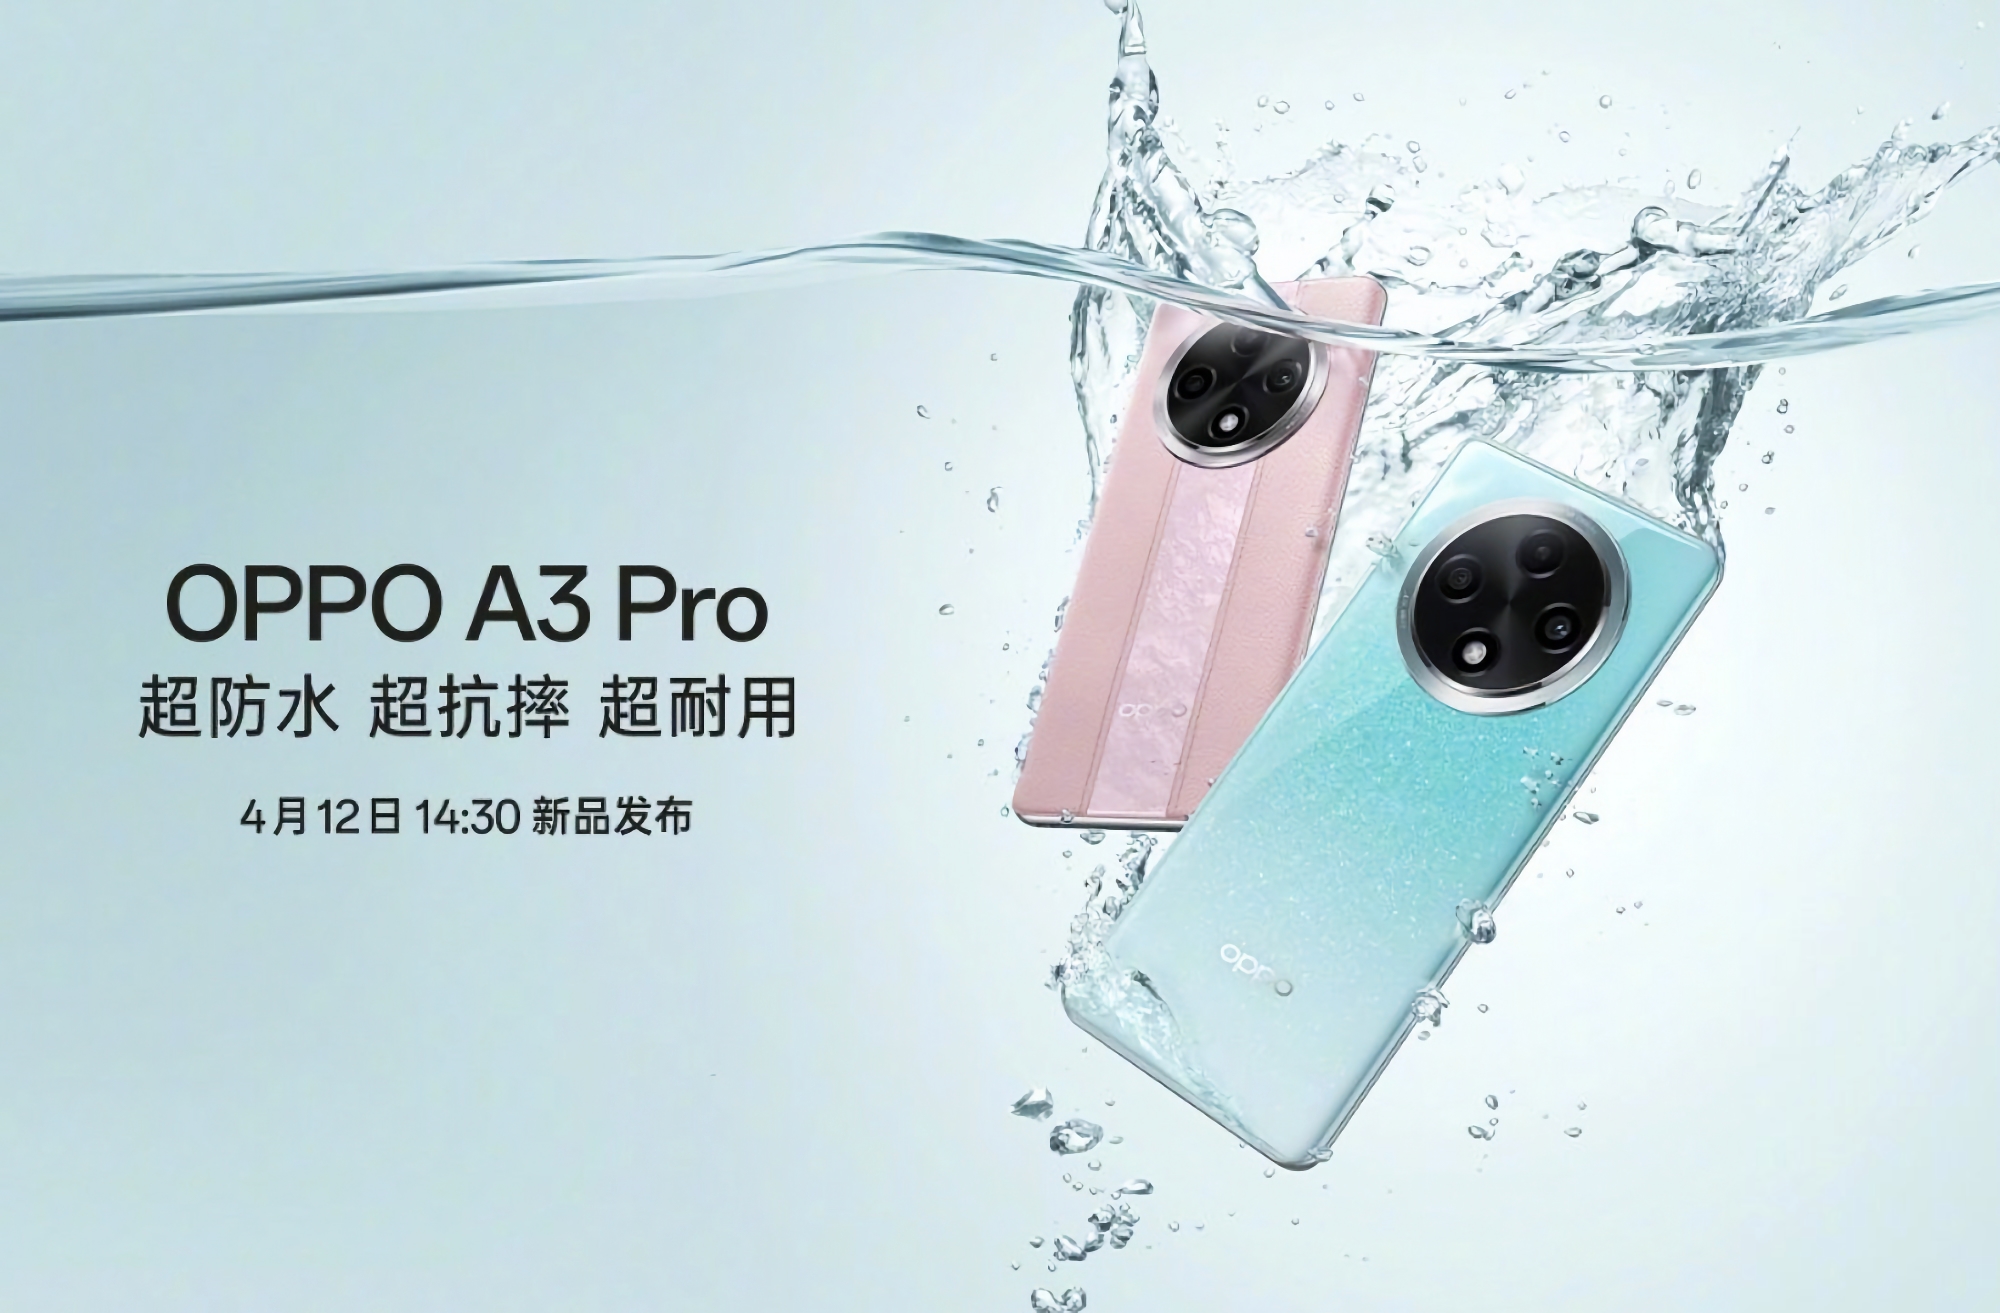 Så er det officielt: OPPO A3 Pro får sin debut den 12. april